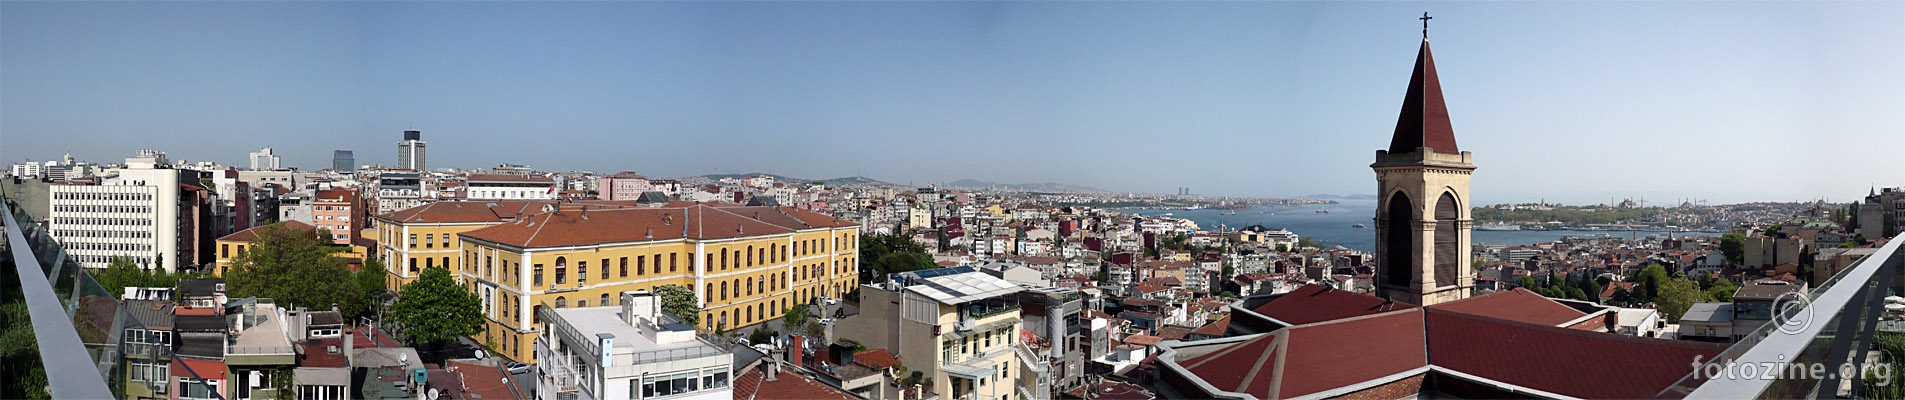 ISTANBUL, 25.04.2012.